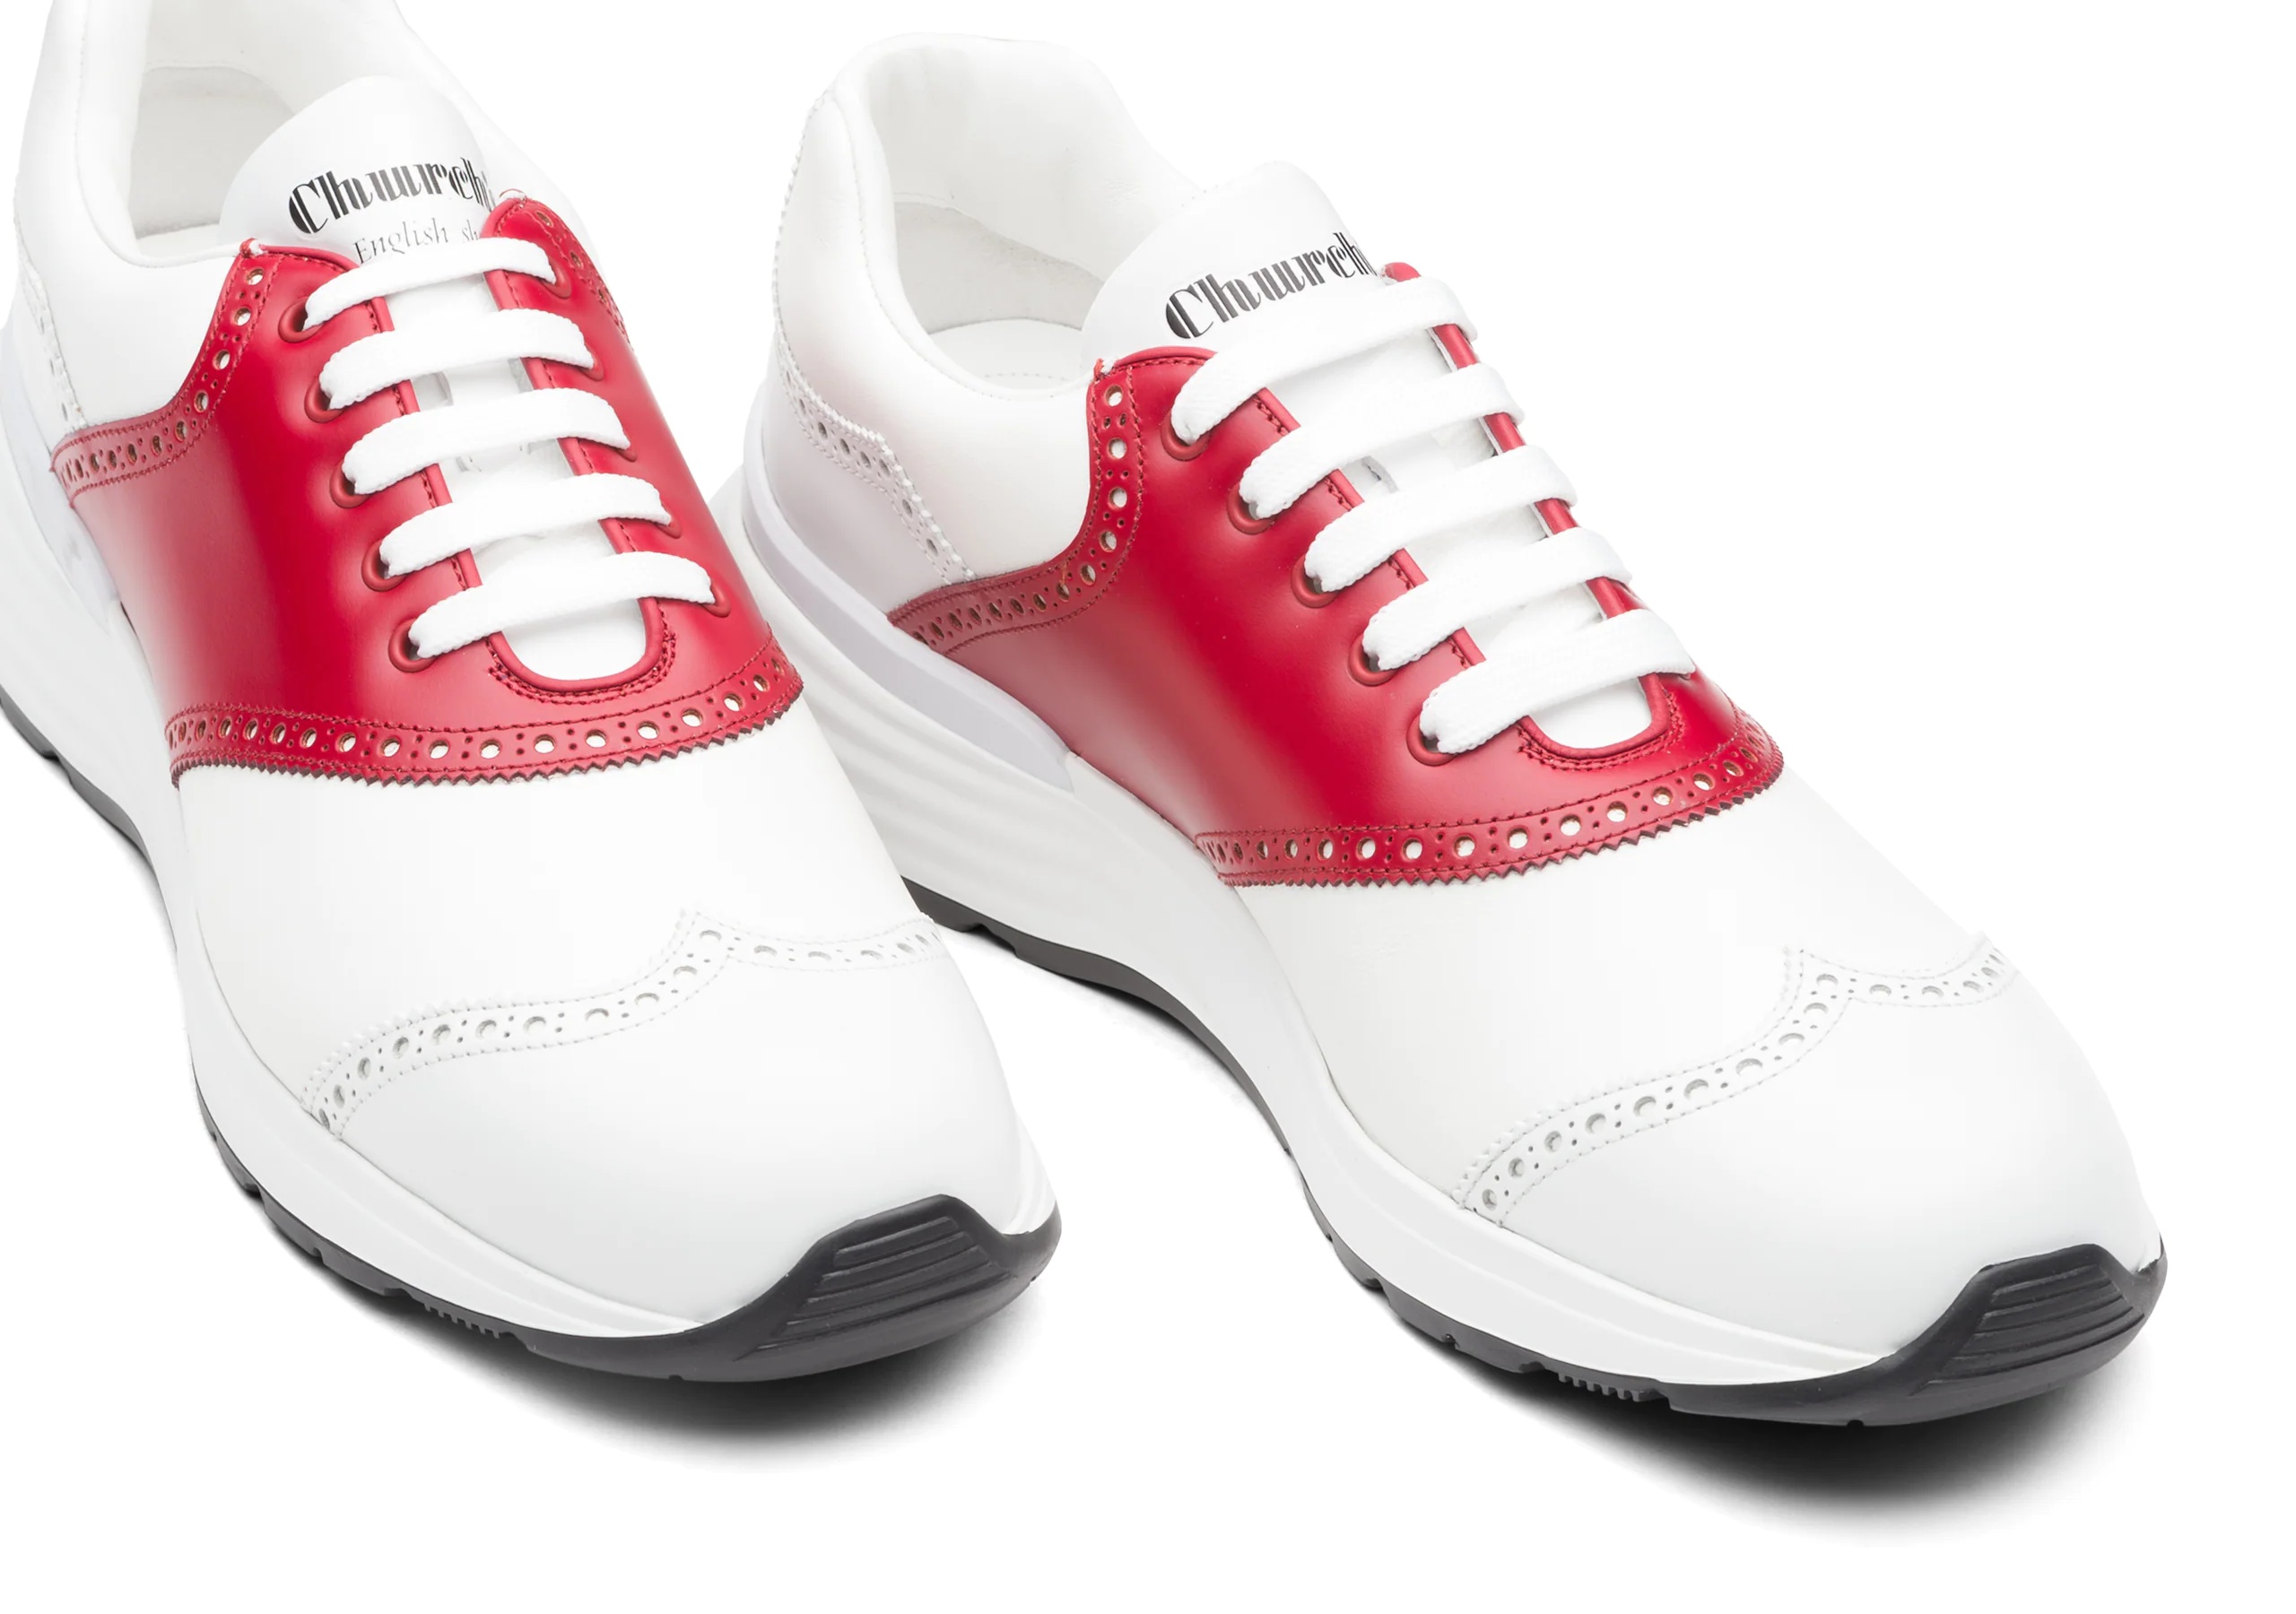 Ch873 golf
Rois Calf Sneaker White/scarlet - 4